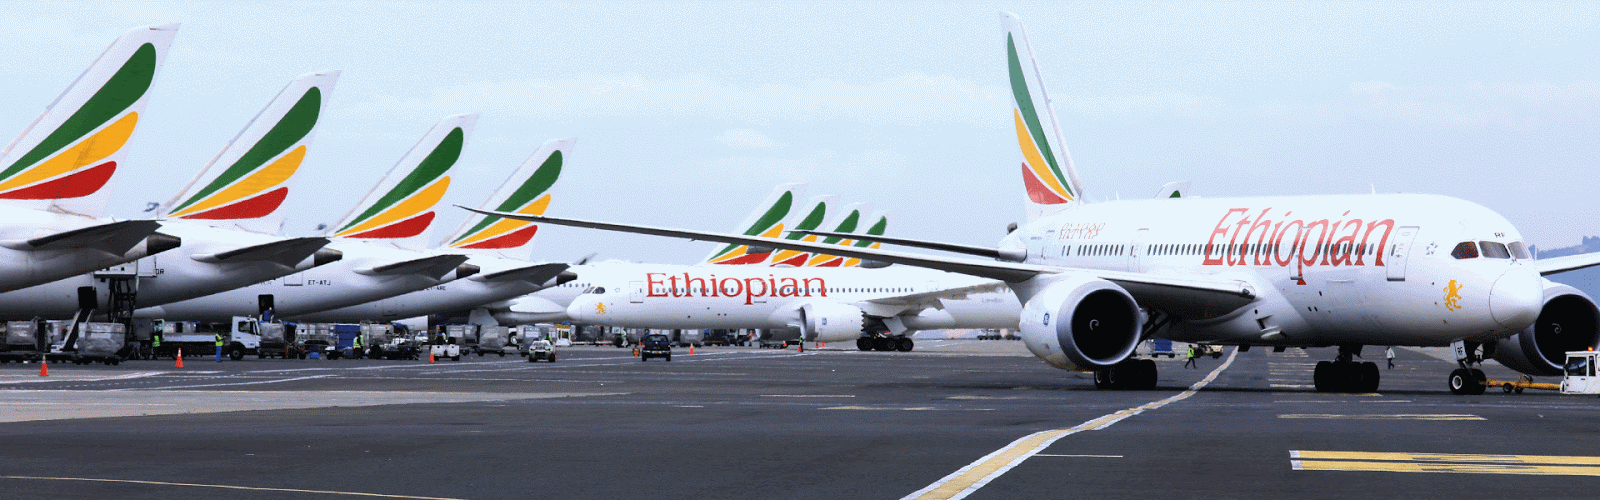 air101-as-governments-lift-lock-down-measures-ethiopian-announces